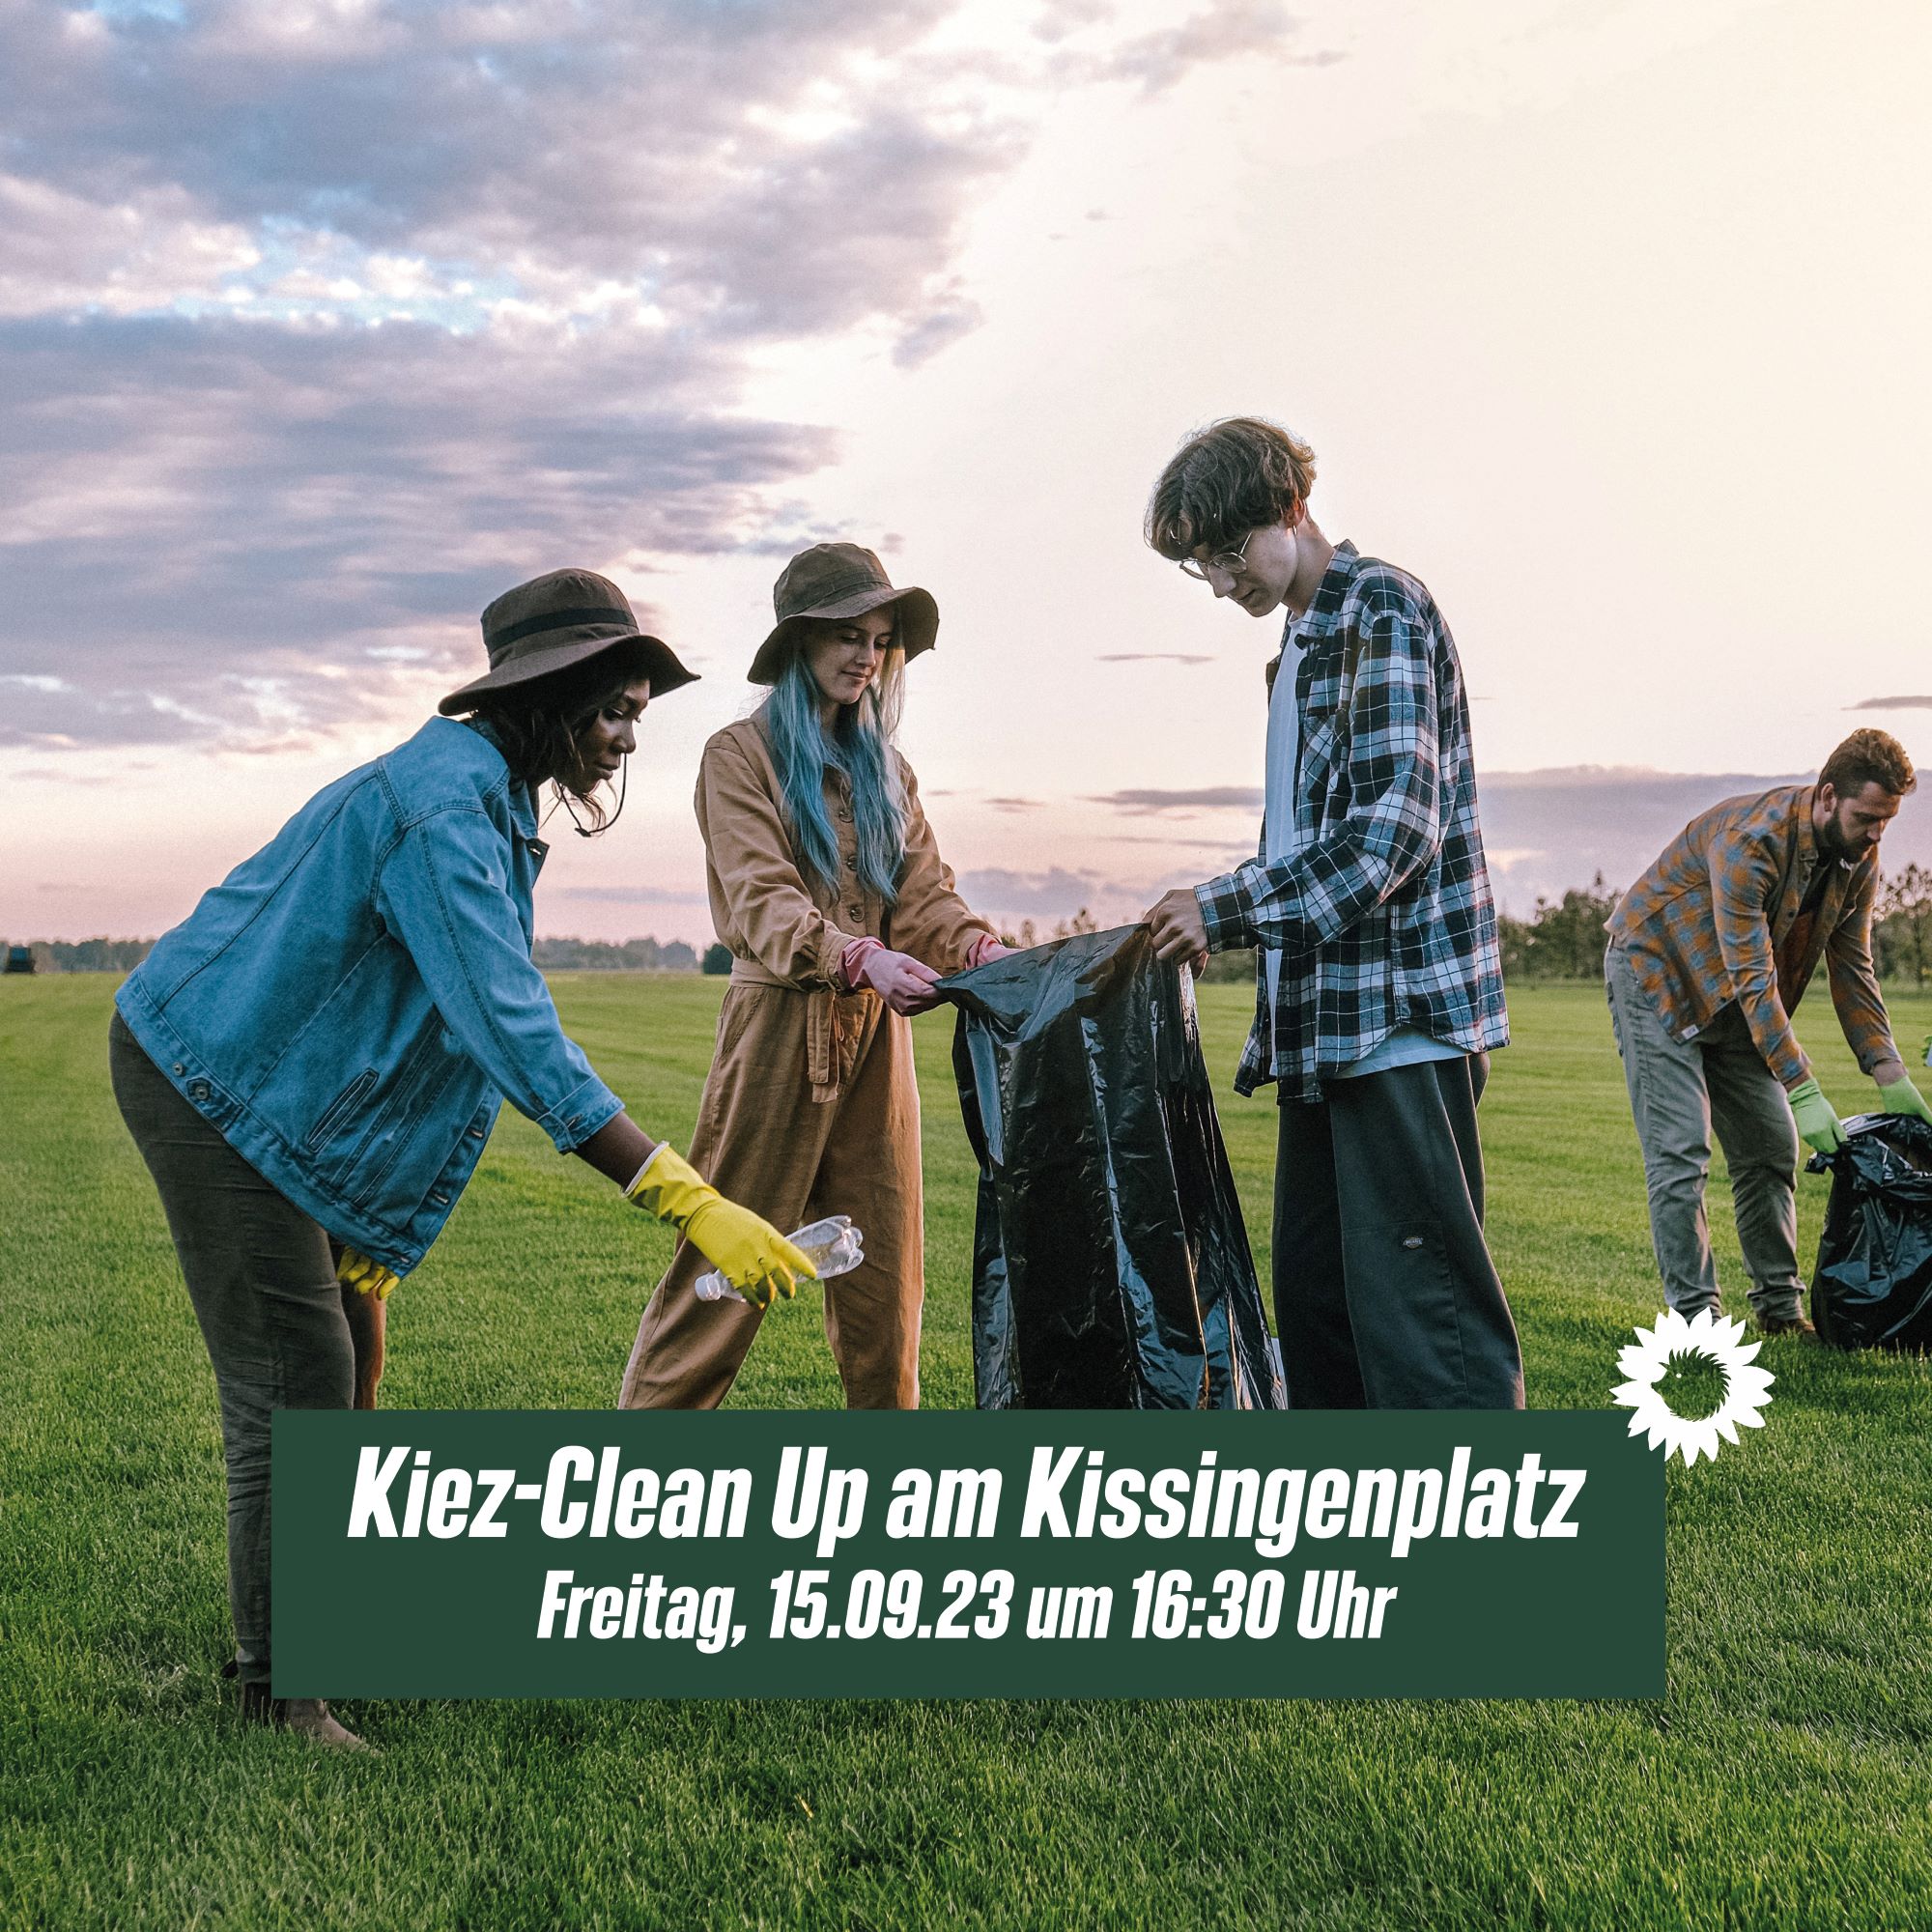 Kiez-cleanup am Kissingenplatz